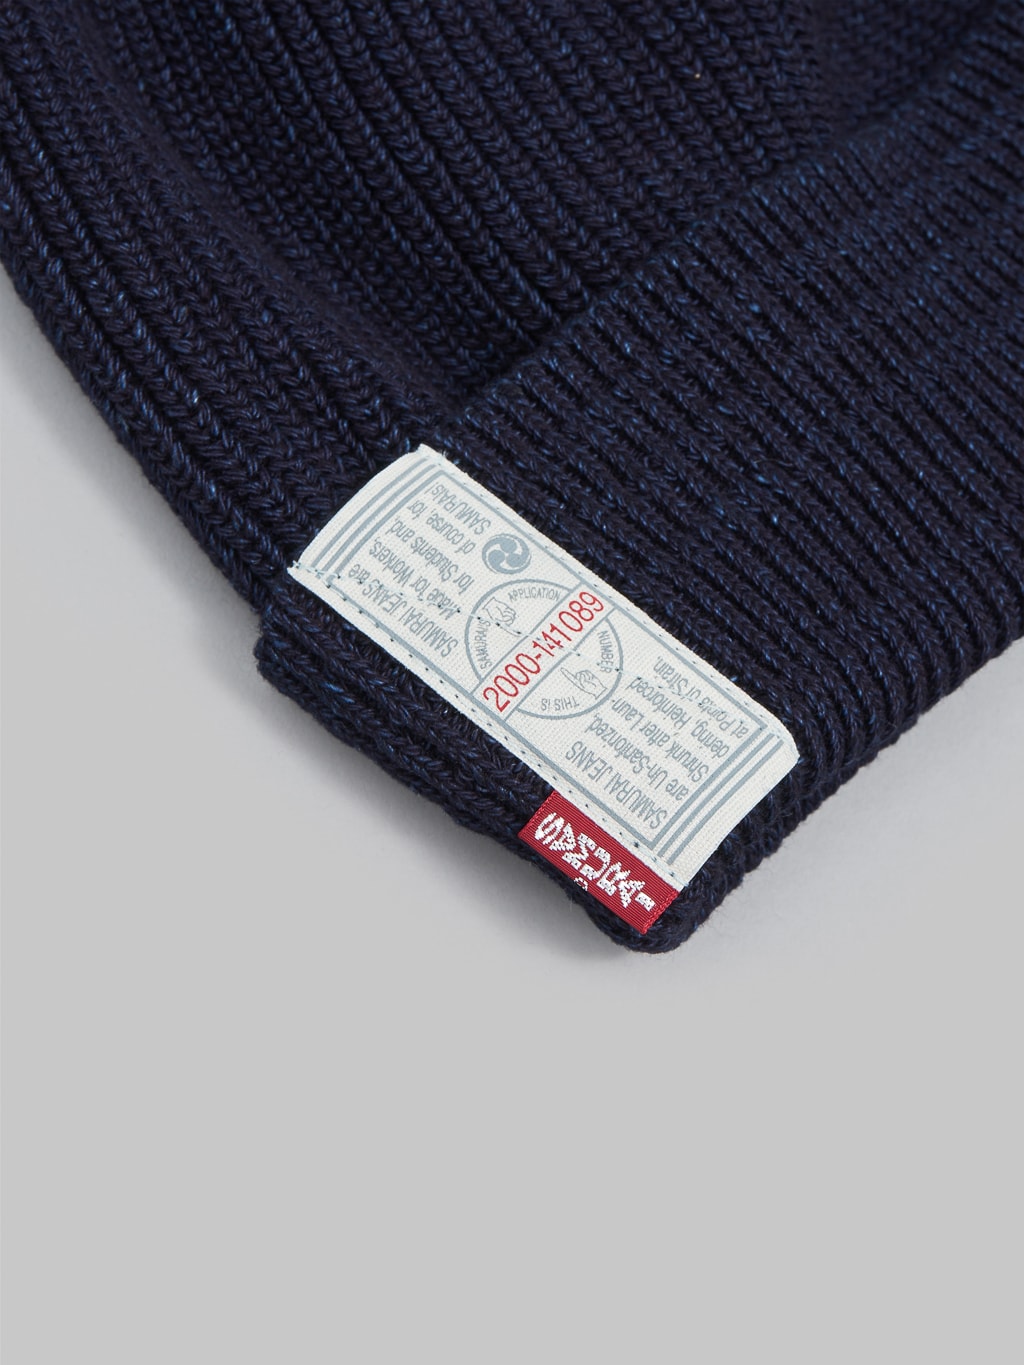 Samurai Jeans SJ501NC Watch Knit Cap Indigo label closeup